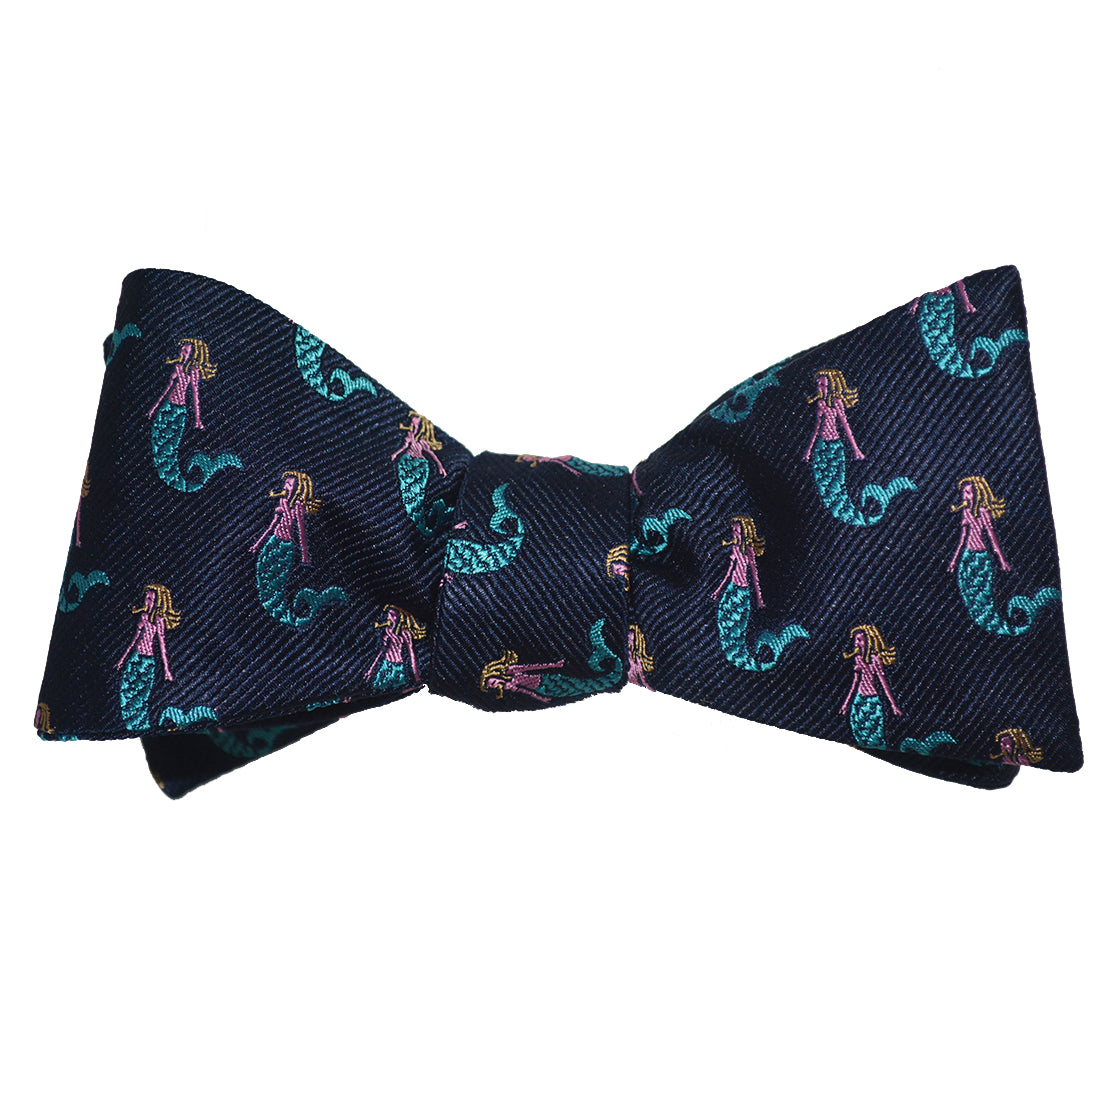 Mermaid Bow Tie - Navy, Woven Silk - SummerTies